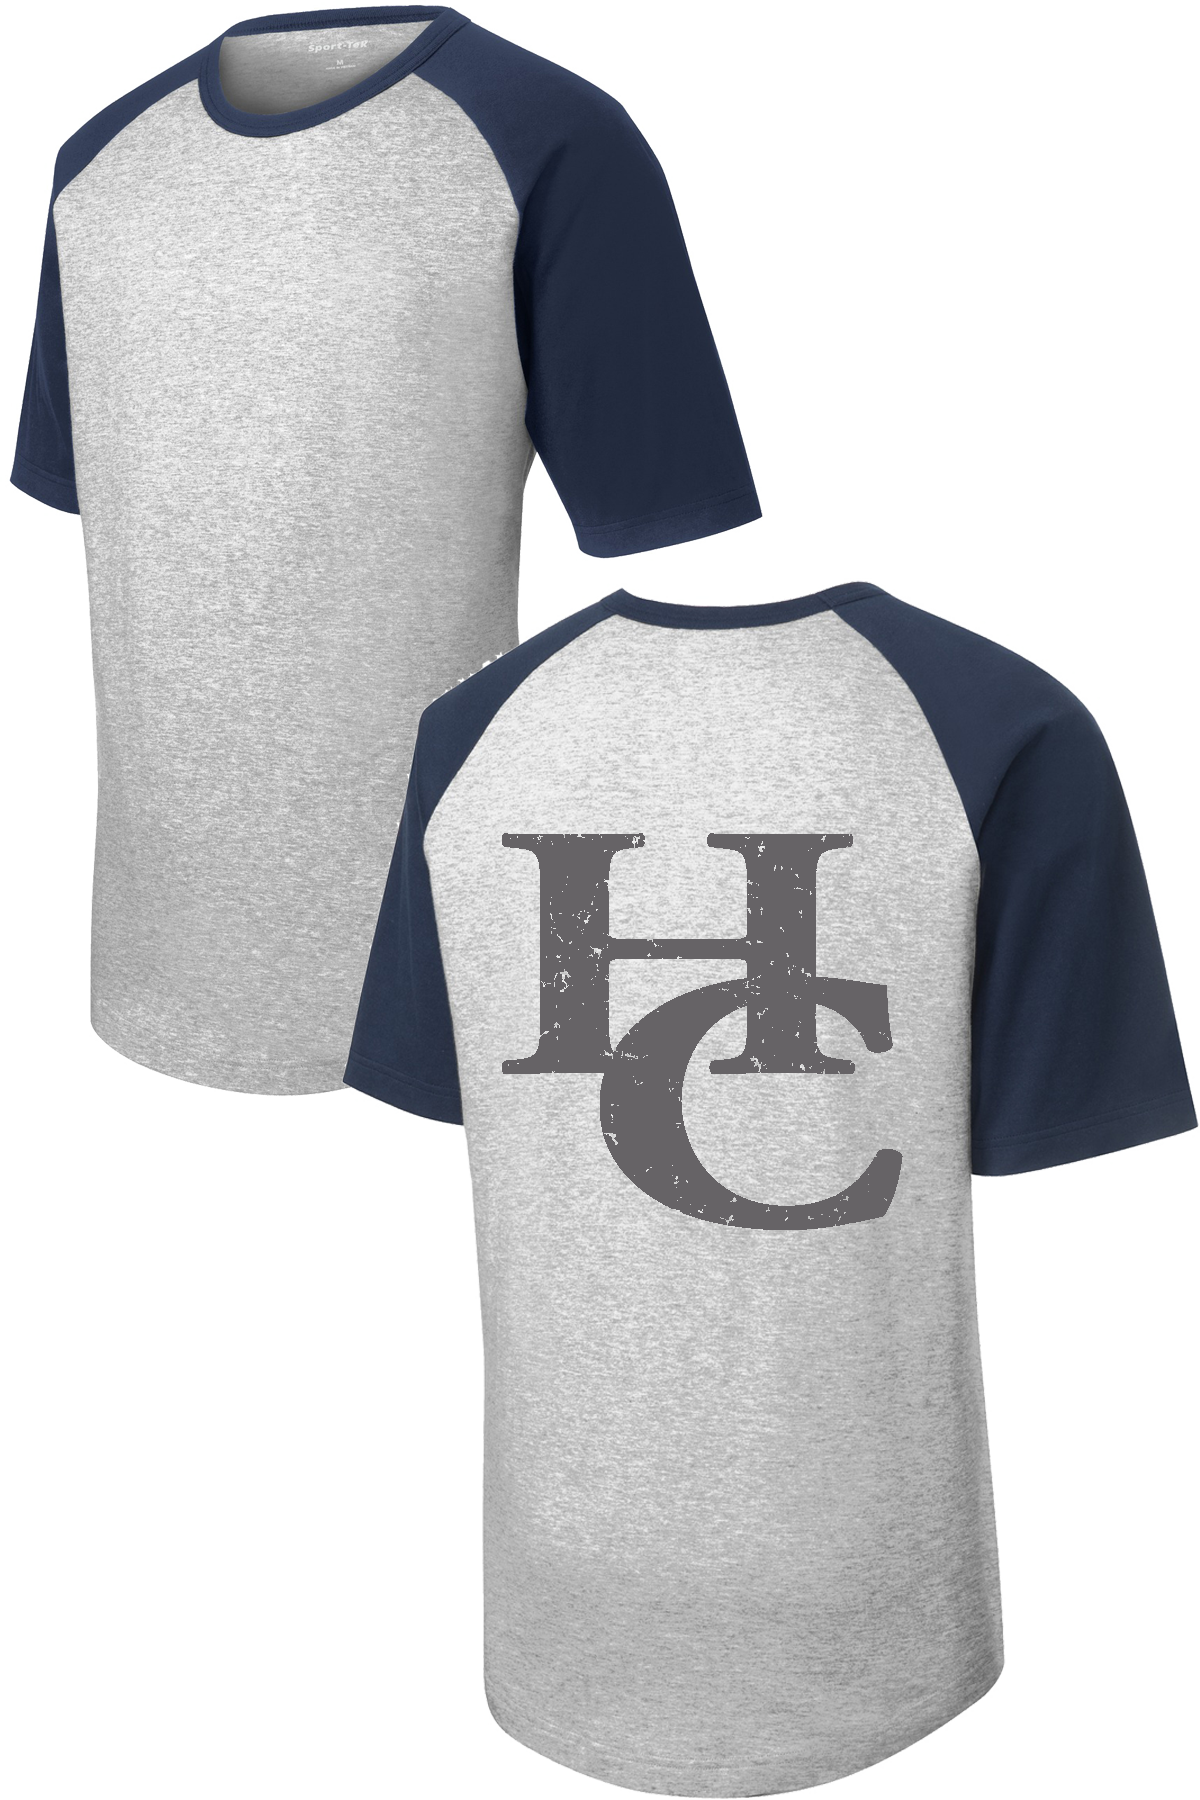 HC YOUTH Raglan T-Shirt -HEATHER GREY/NAVY